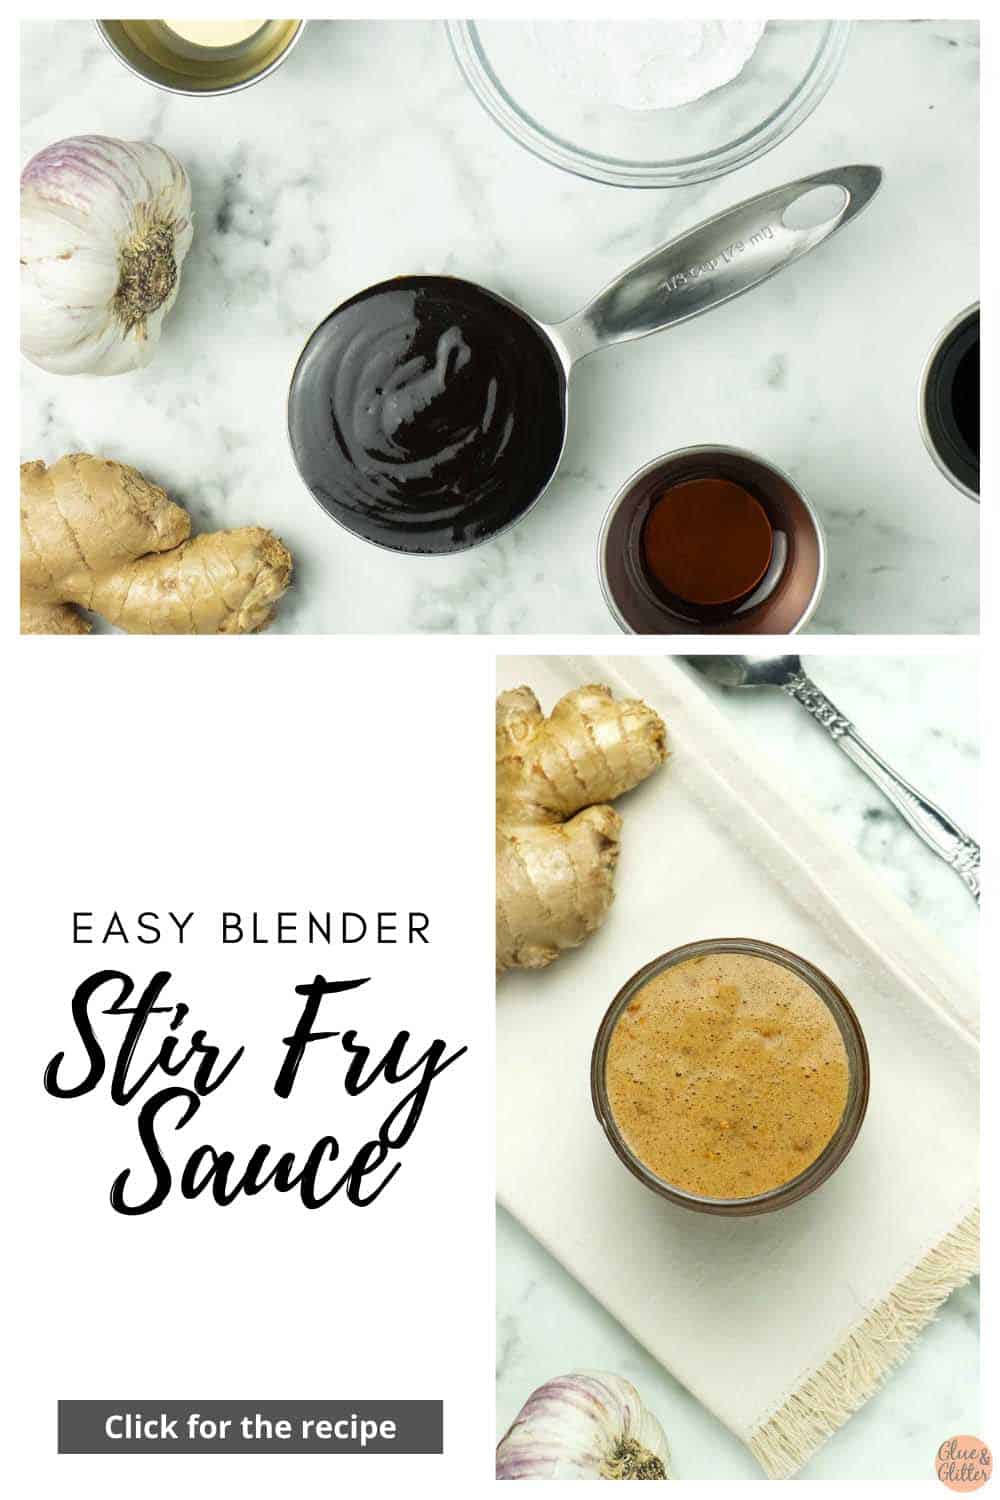 image collage showing vegan stir fry sauce ingredients and after blending. Text reads: "Easy Blender Stir Fry Sauce"